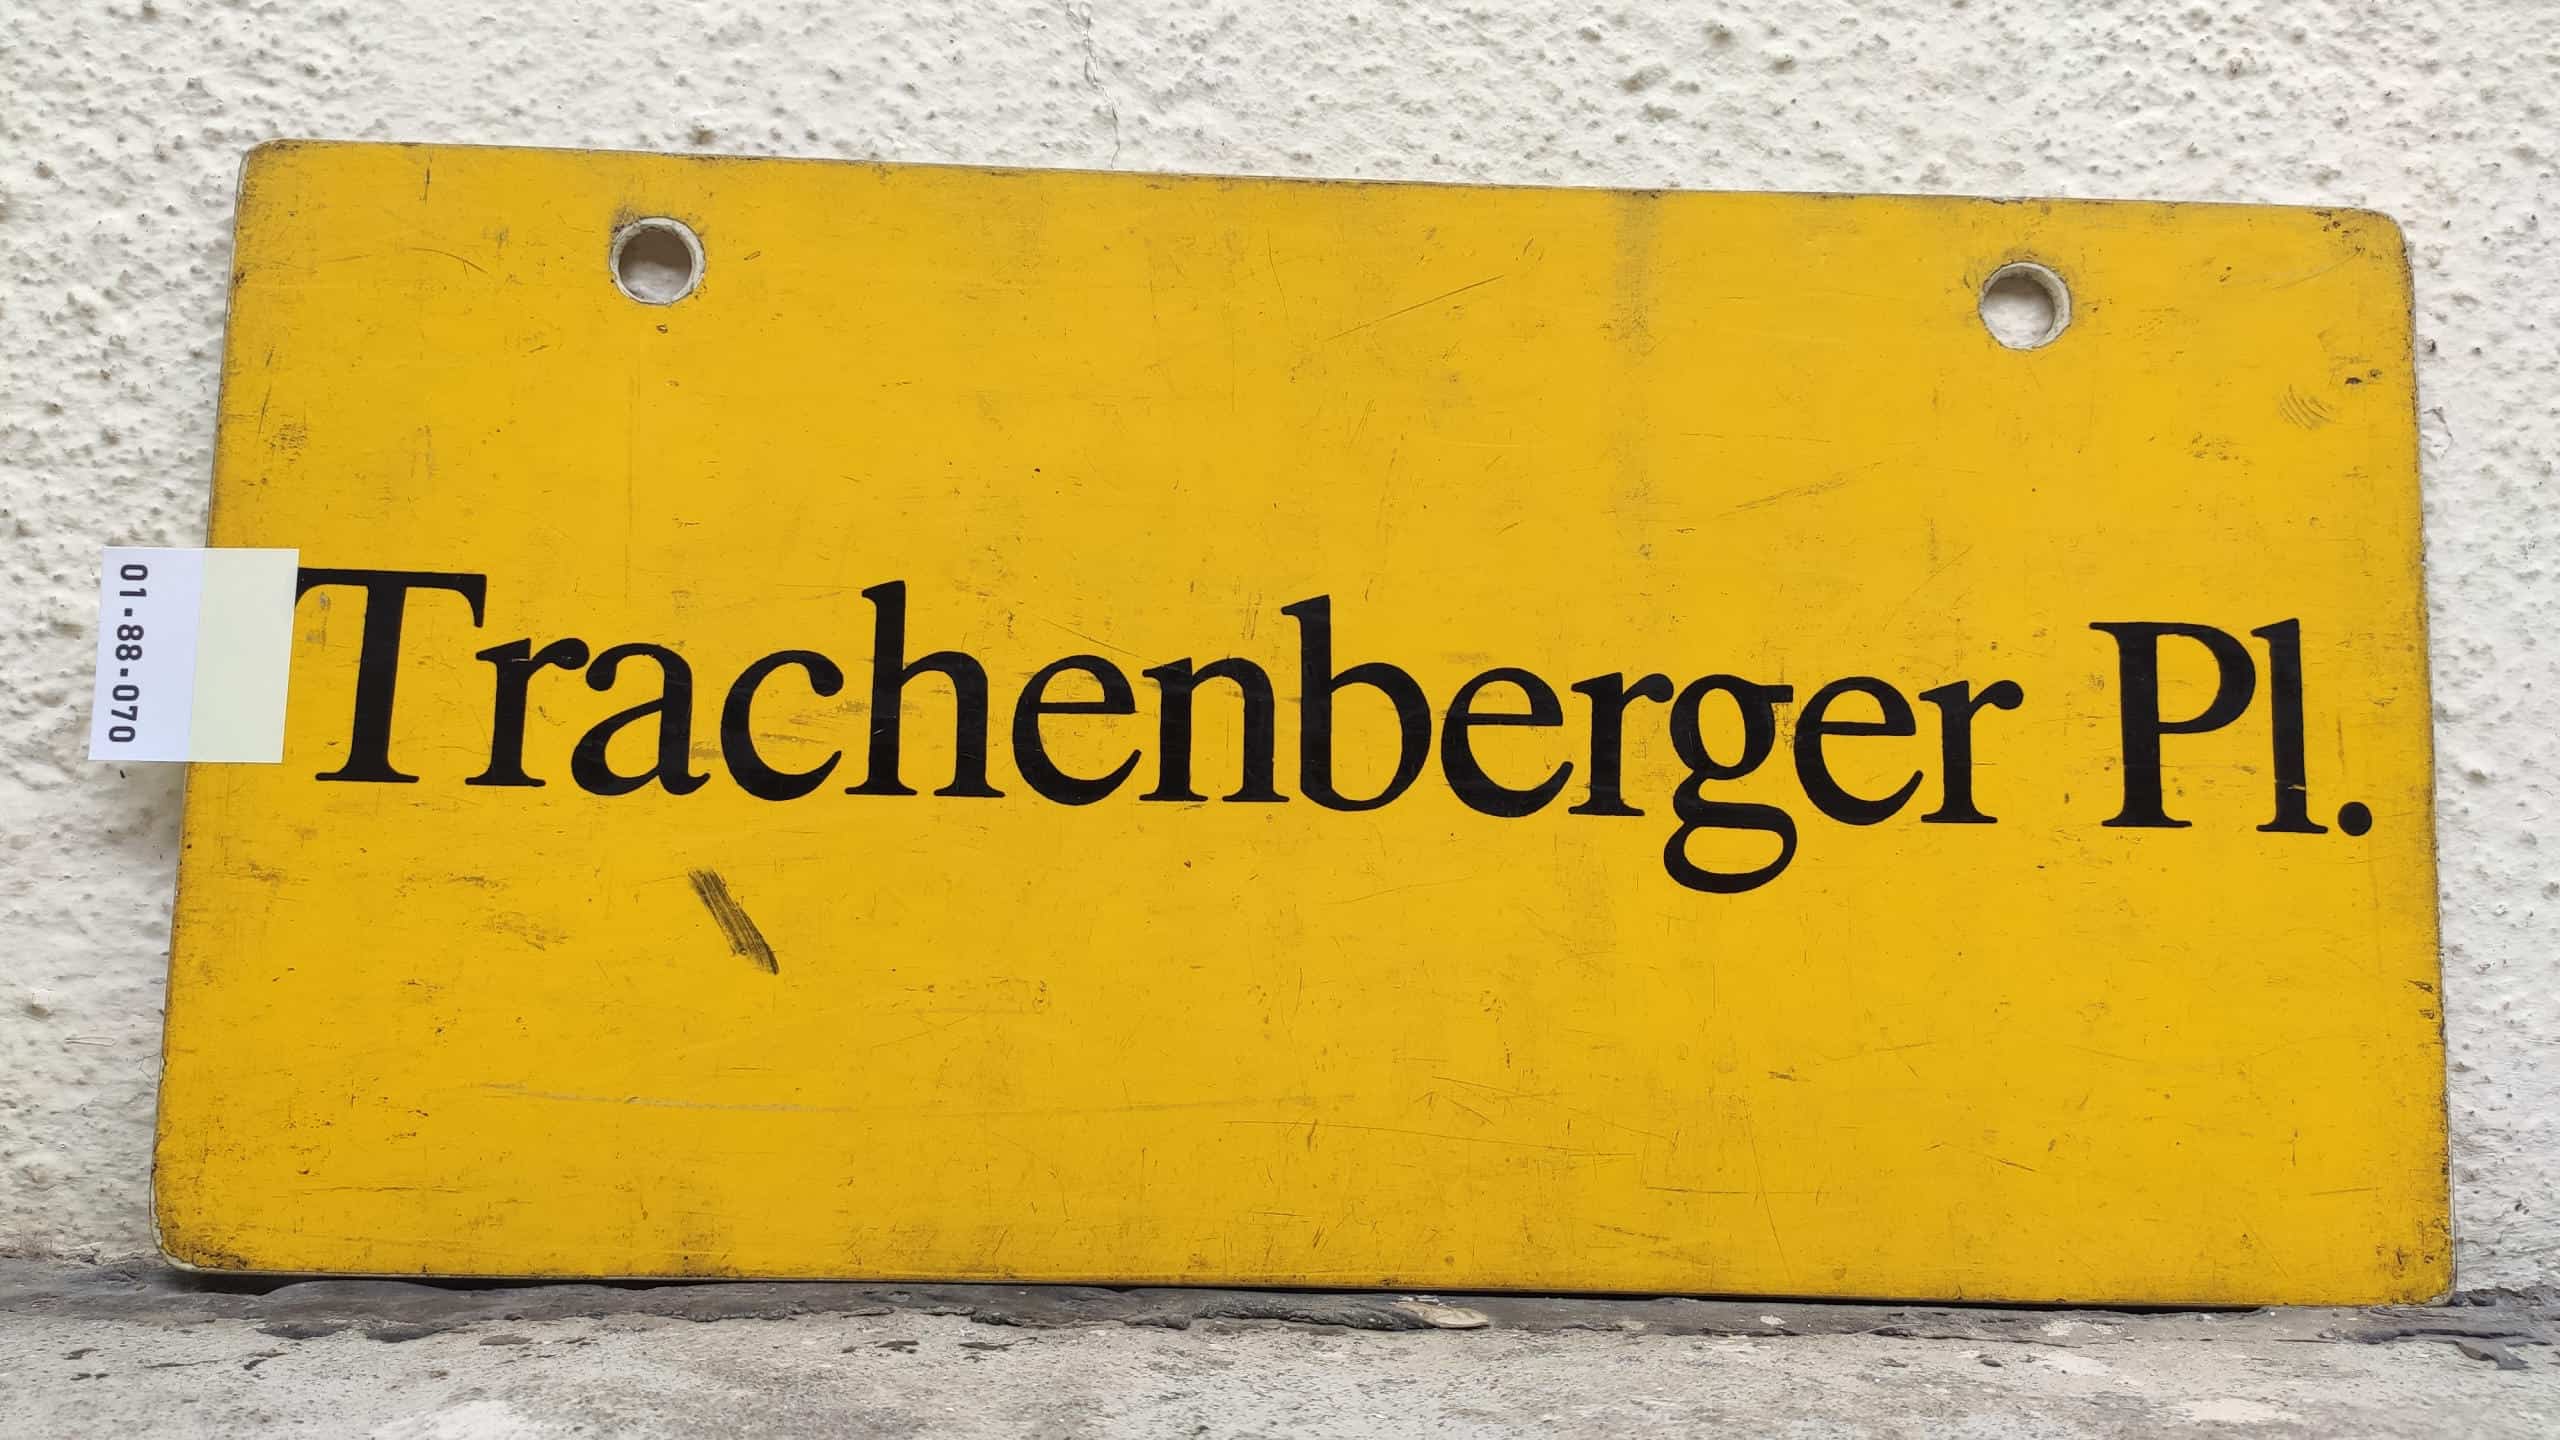 Trachenberger Pl.